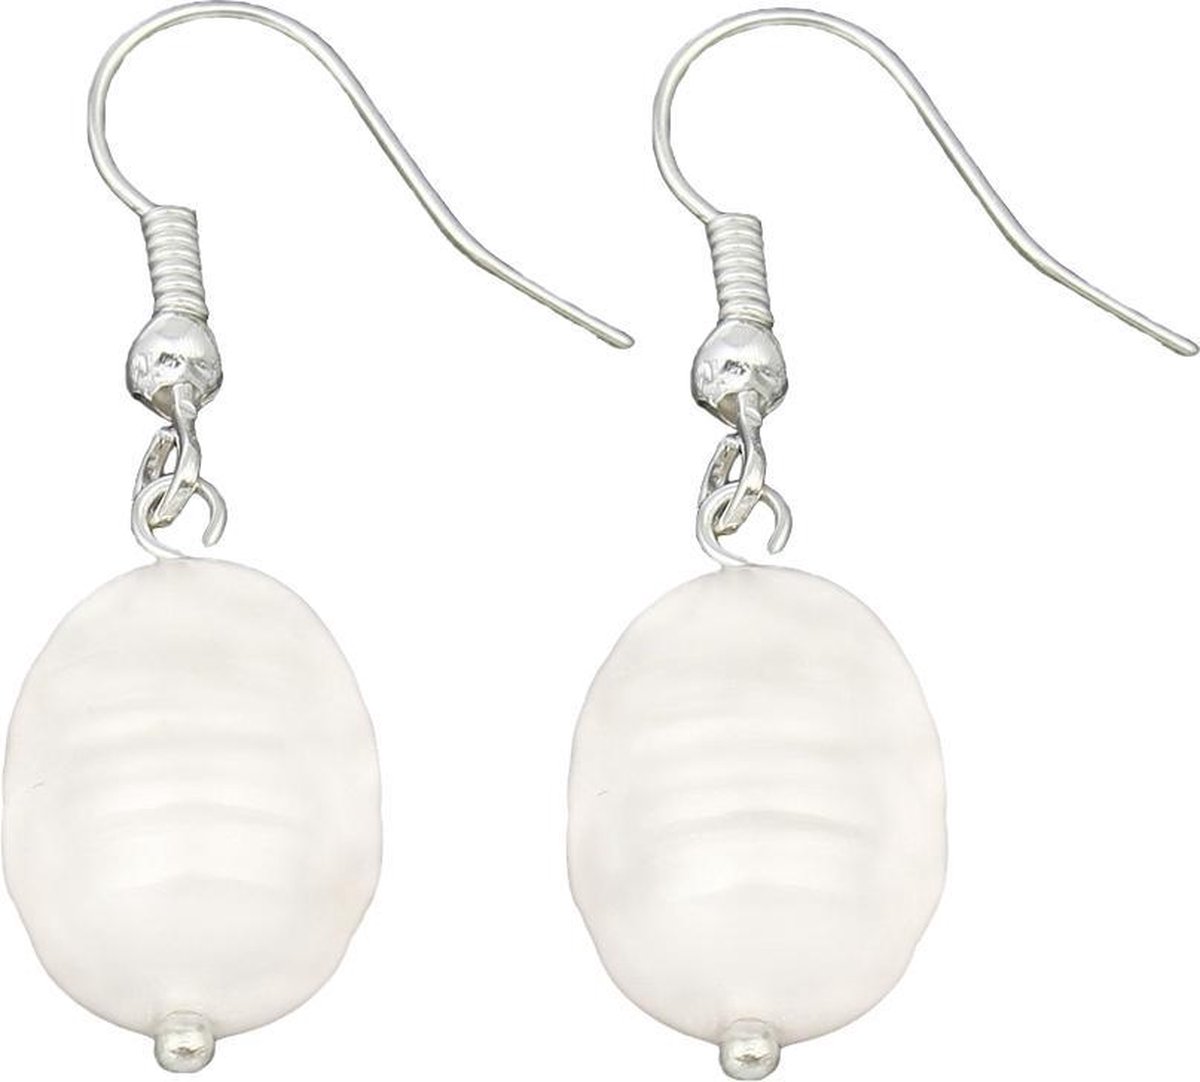 Zoetwater parel oorbellen Dangling Pearl White - oorhangers - echte parels - sterling zilver (925) - wit